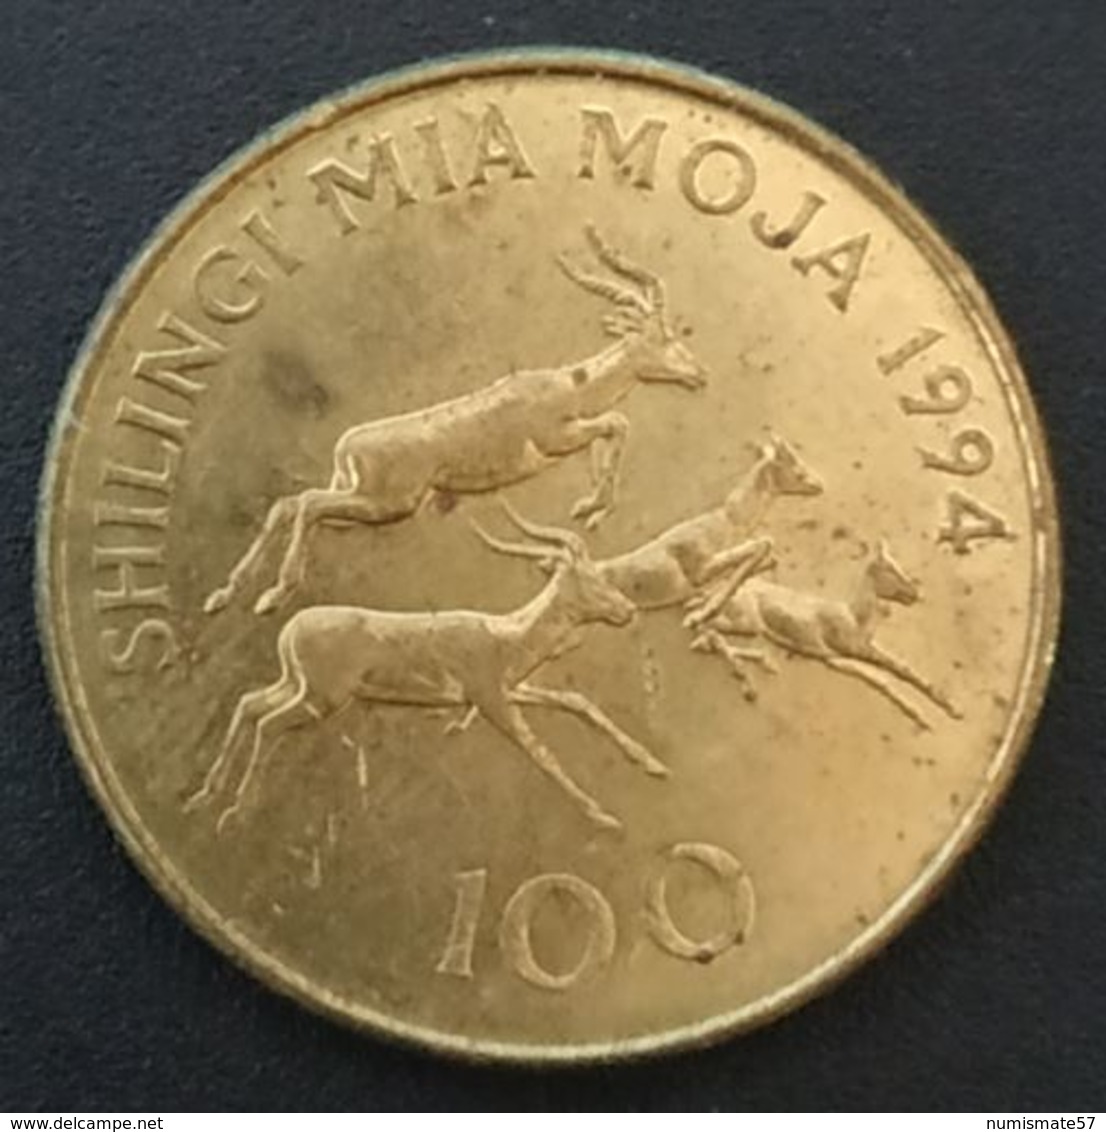 TANZANIE - TANZANIA - 100 SHILINGI SHILINGI MIA MOJA 1994 - MWALIMU JULIUS K. NYERERE - KM 32 - Antilope Impalas - Tanzanía